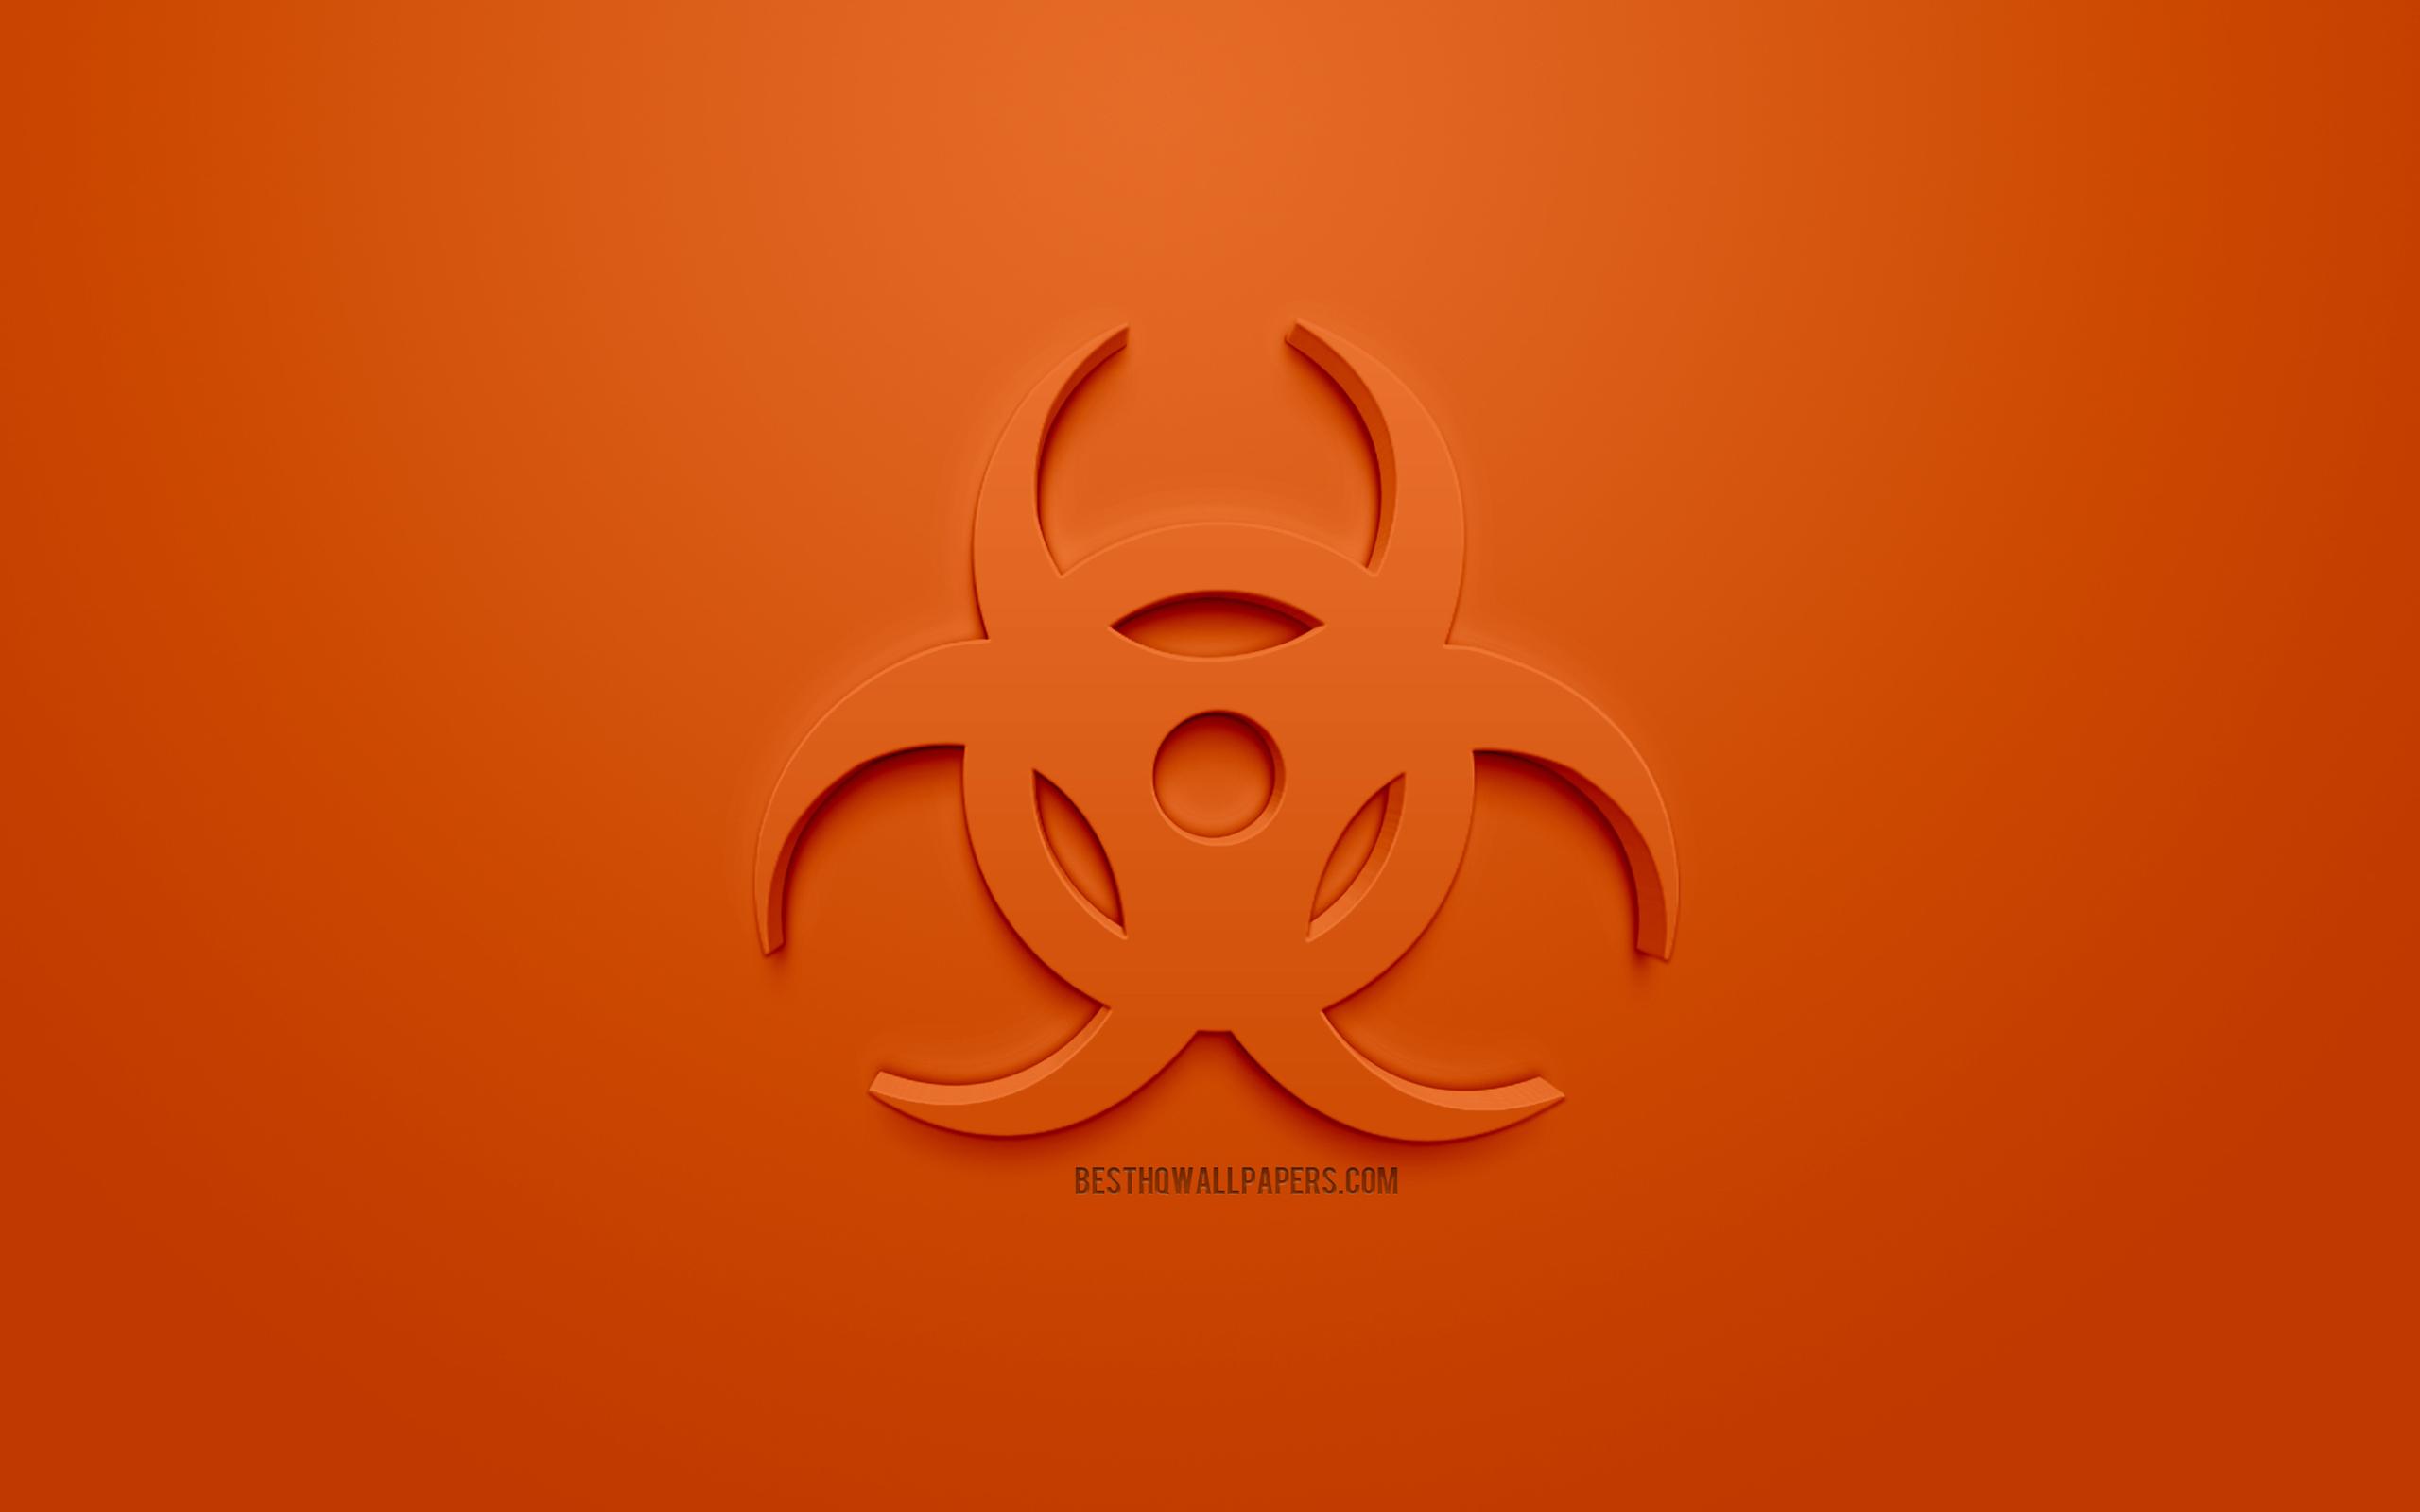 Download wallpaper Biological hazard 3D sign, biohazard 3D